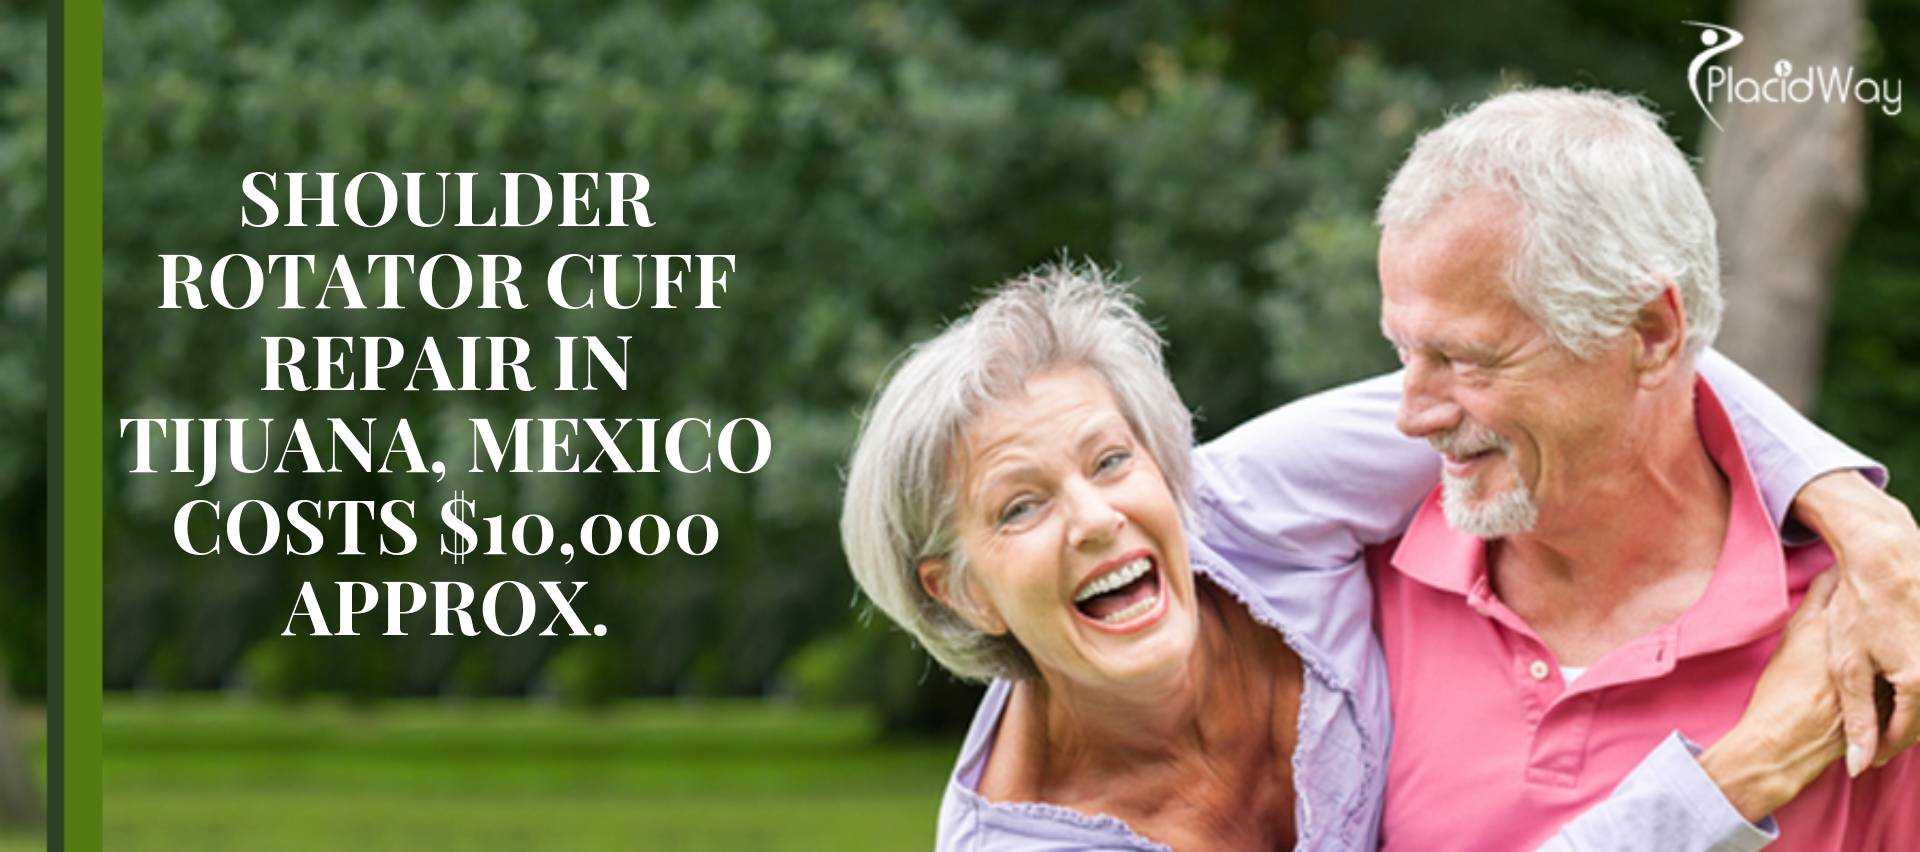 Shoulder Rotator Cuff Repair in Tijuana, Mexico Cost